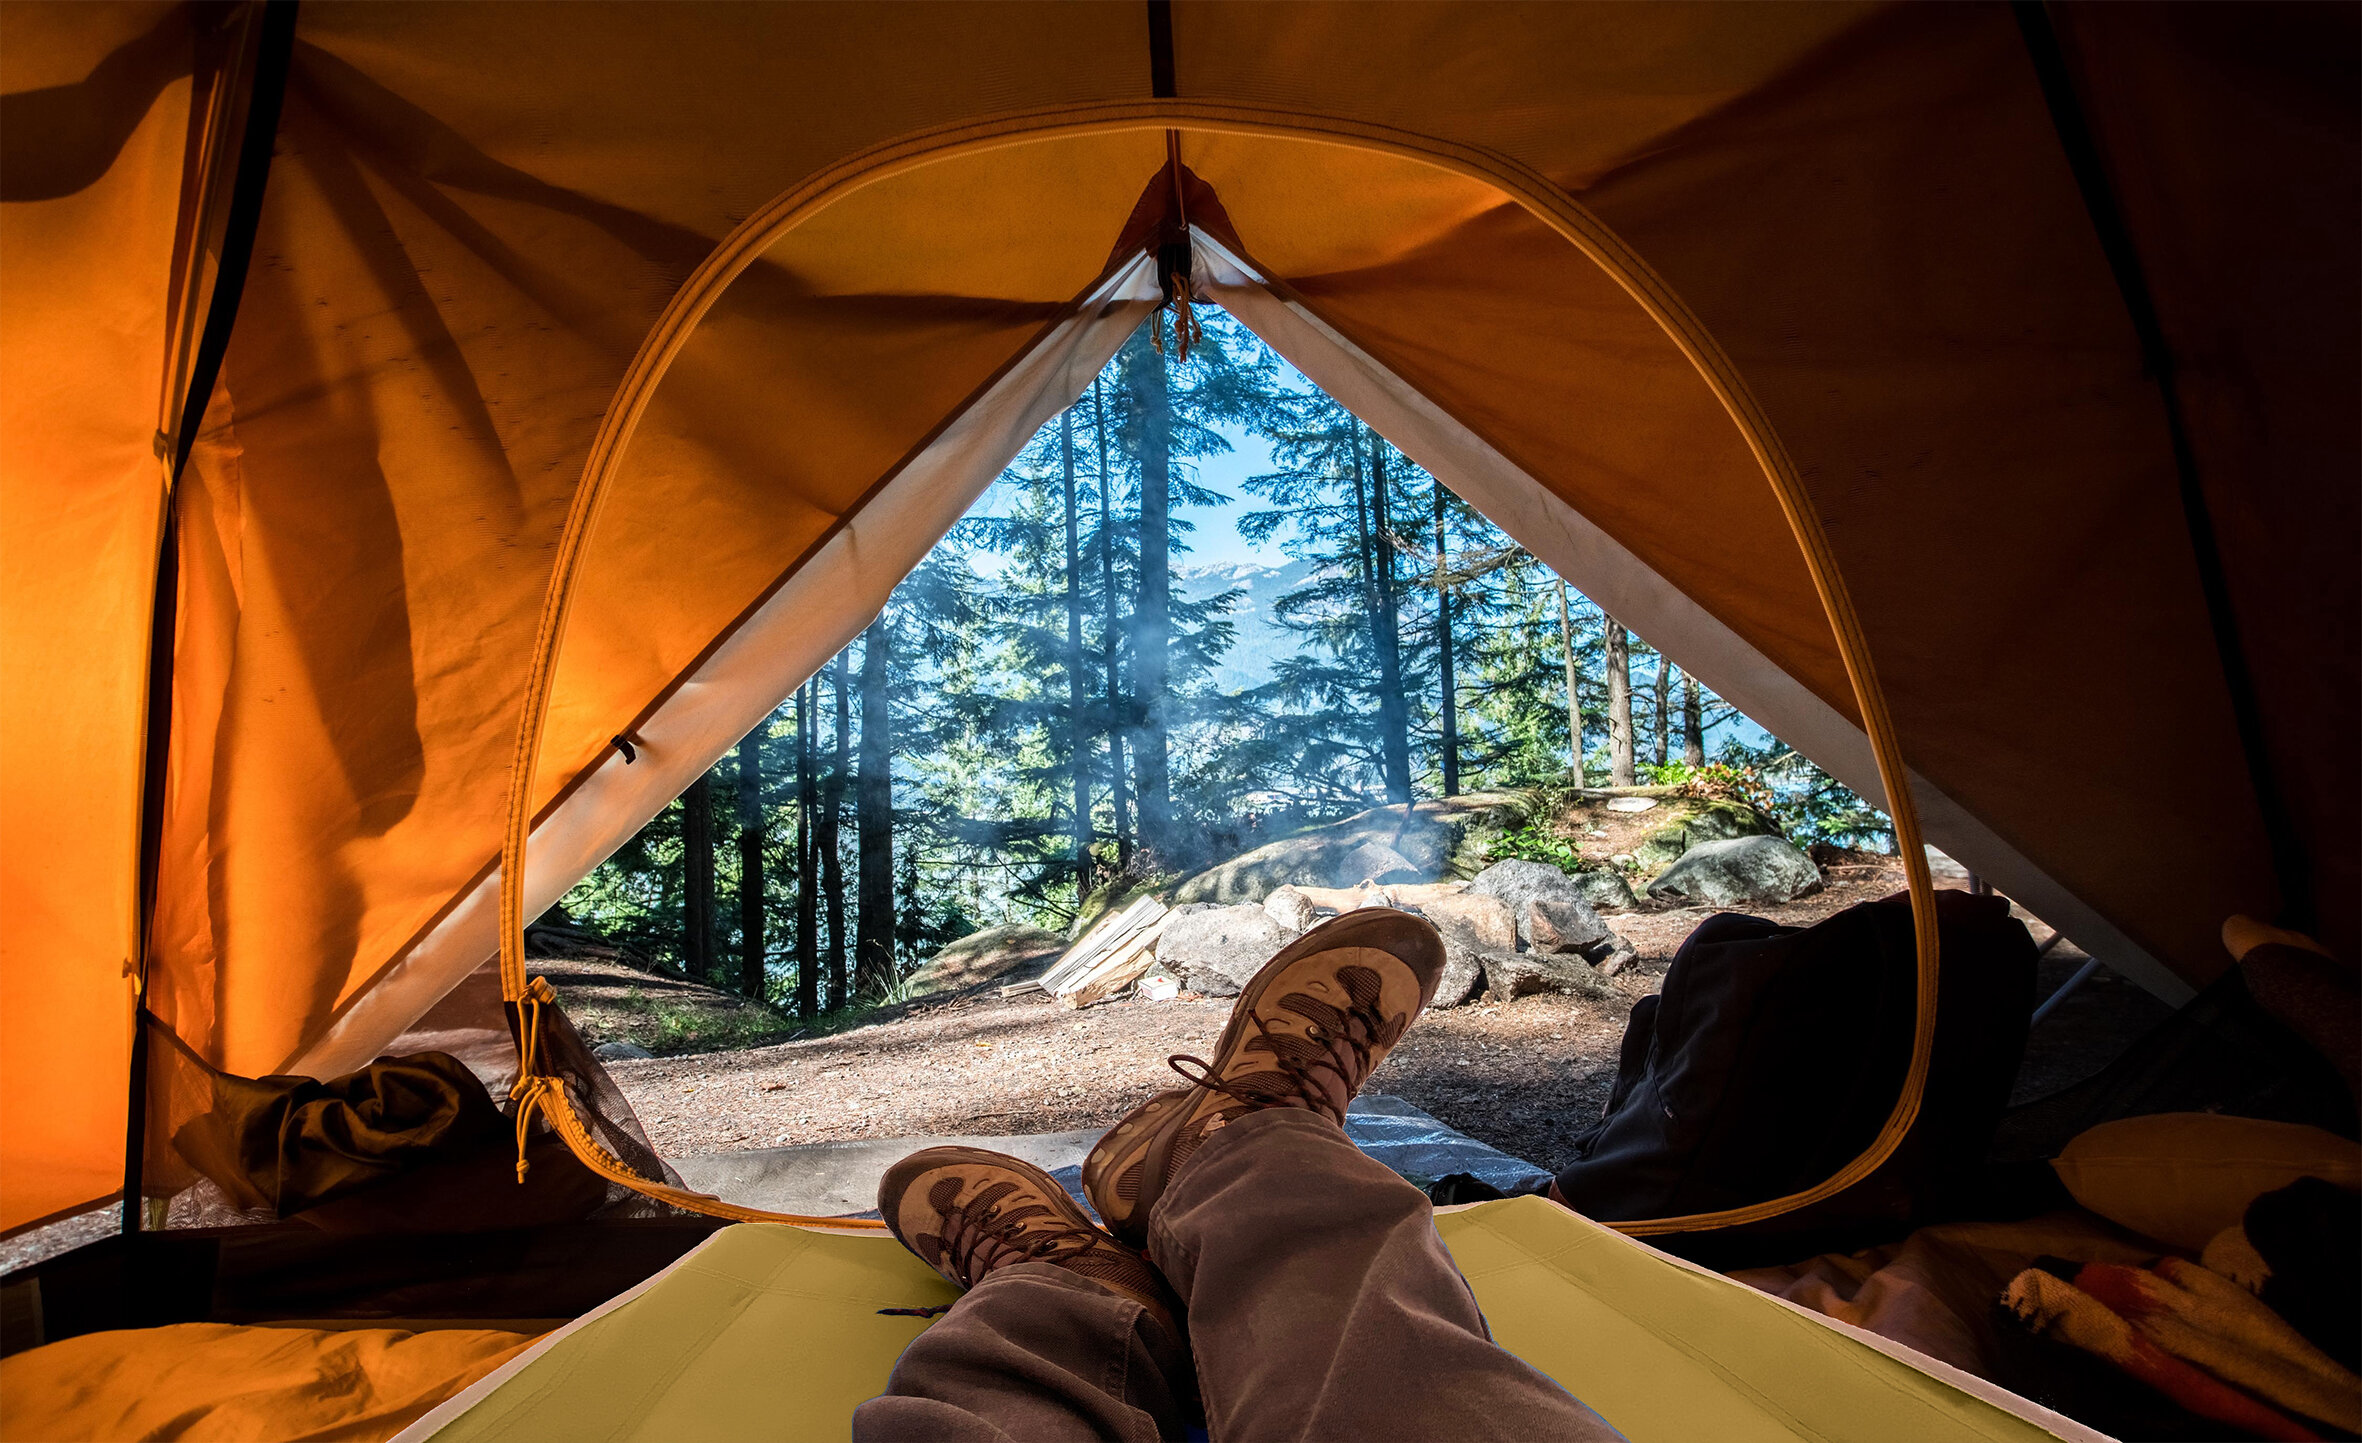 Grand lit de camping pliant - Adventure Forest — Hidden Wild Outdoor Gear  (Canada - FR)